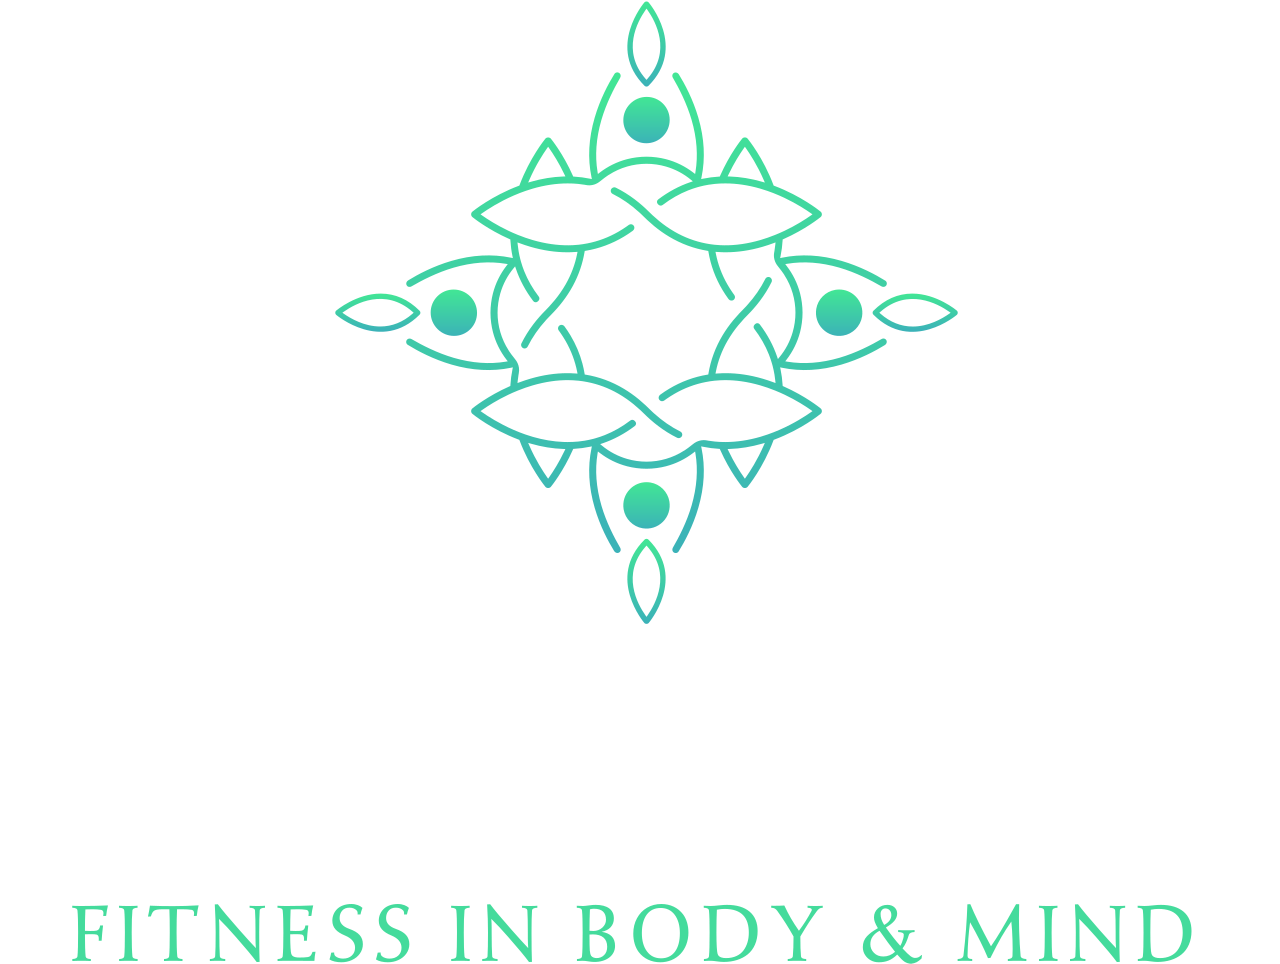 WellnessMD's logo